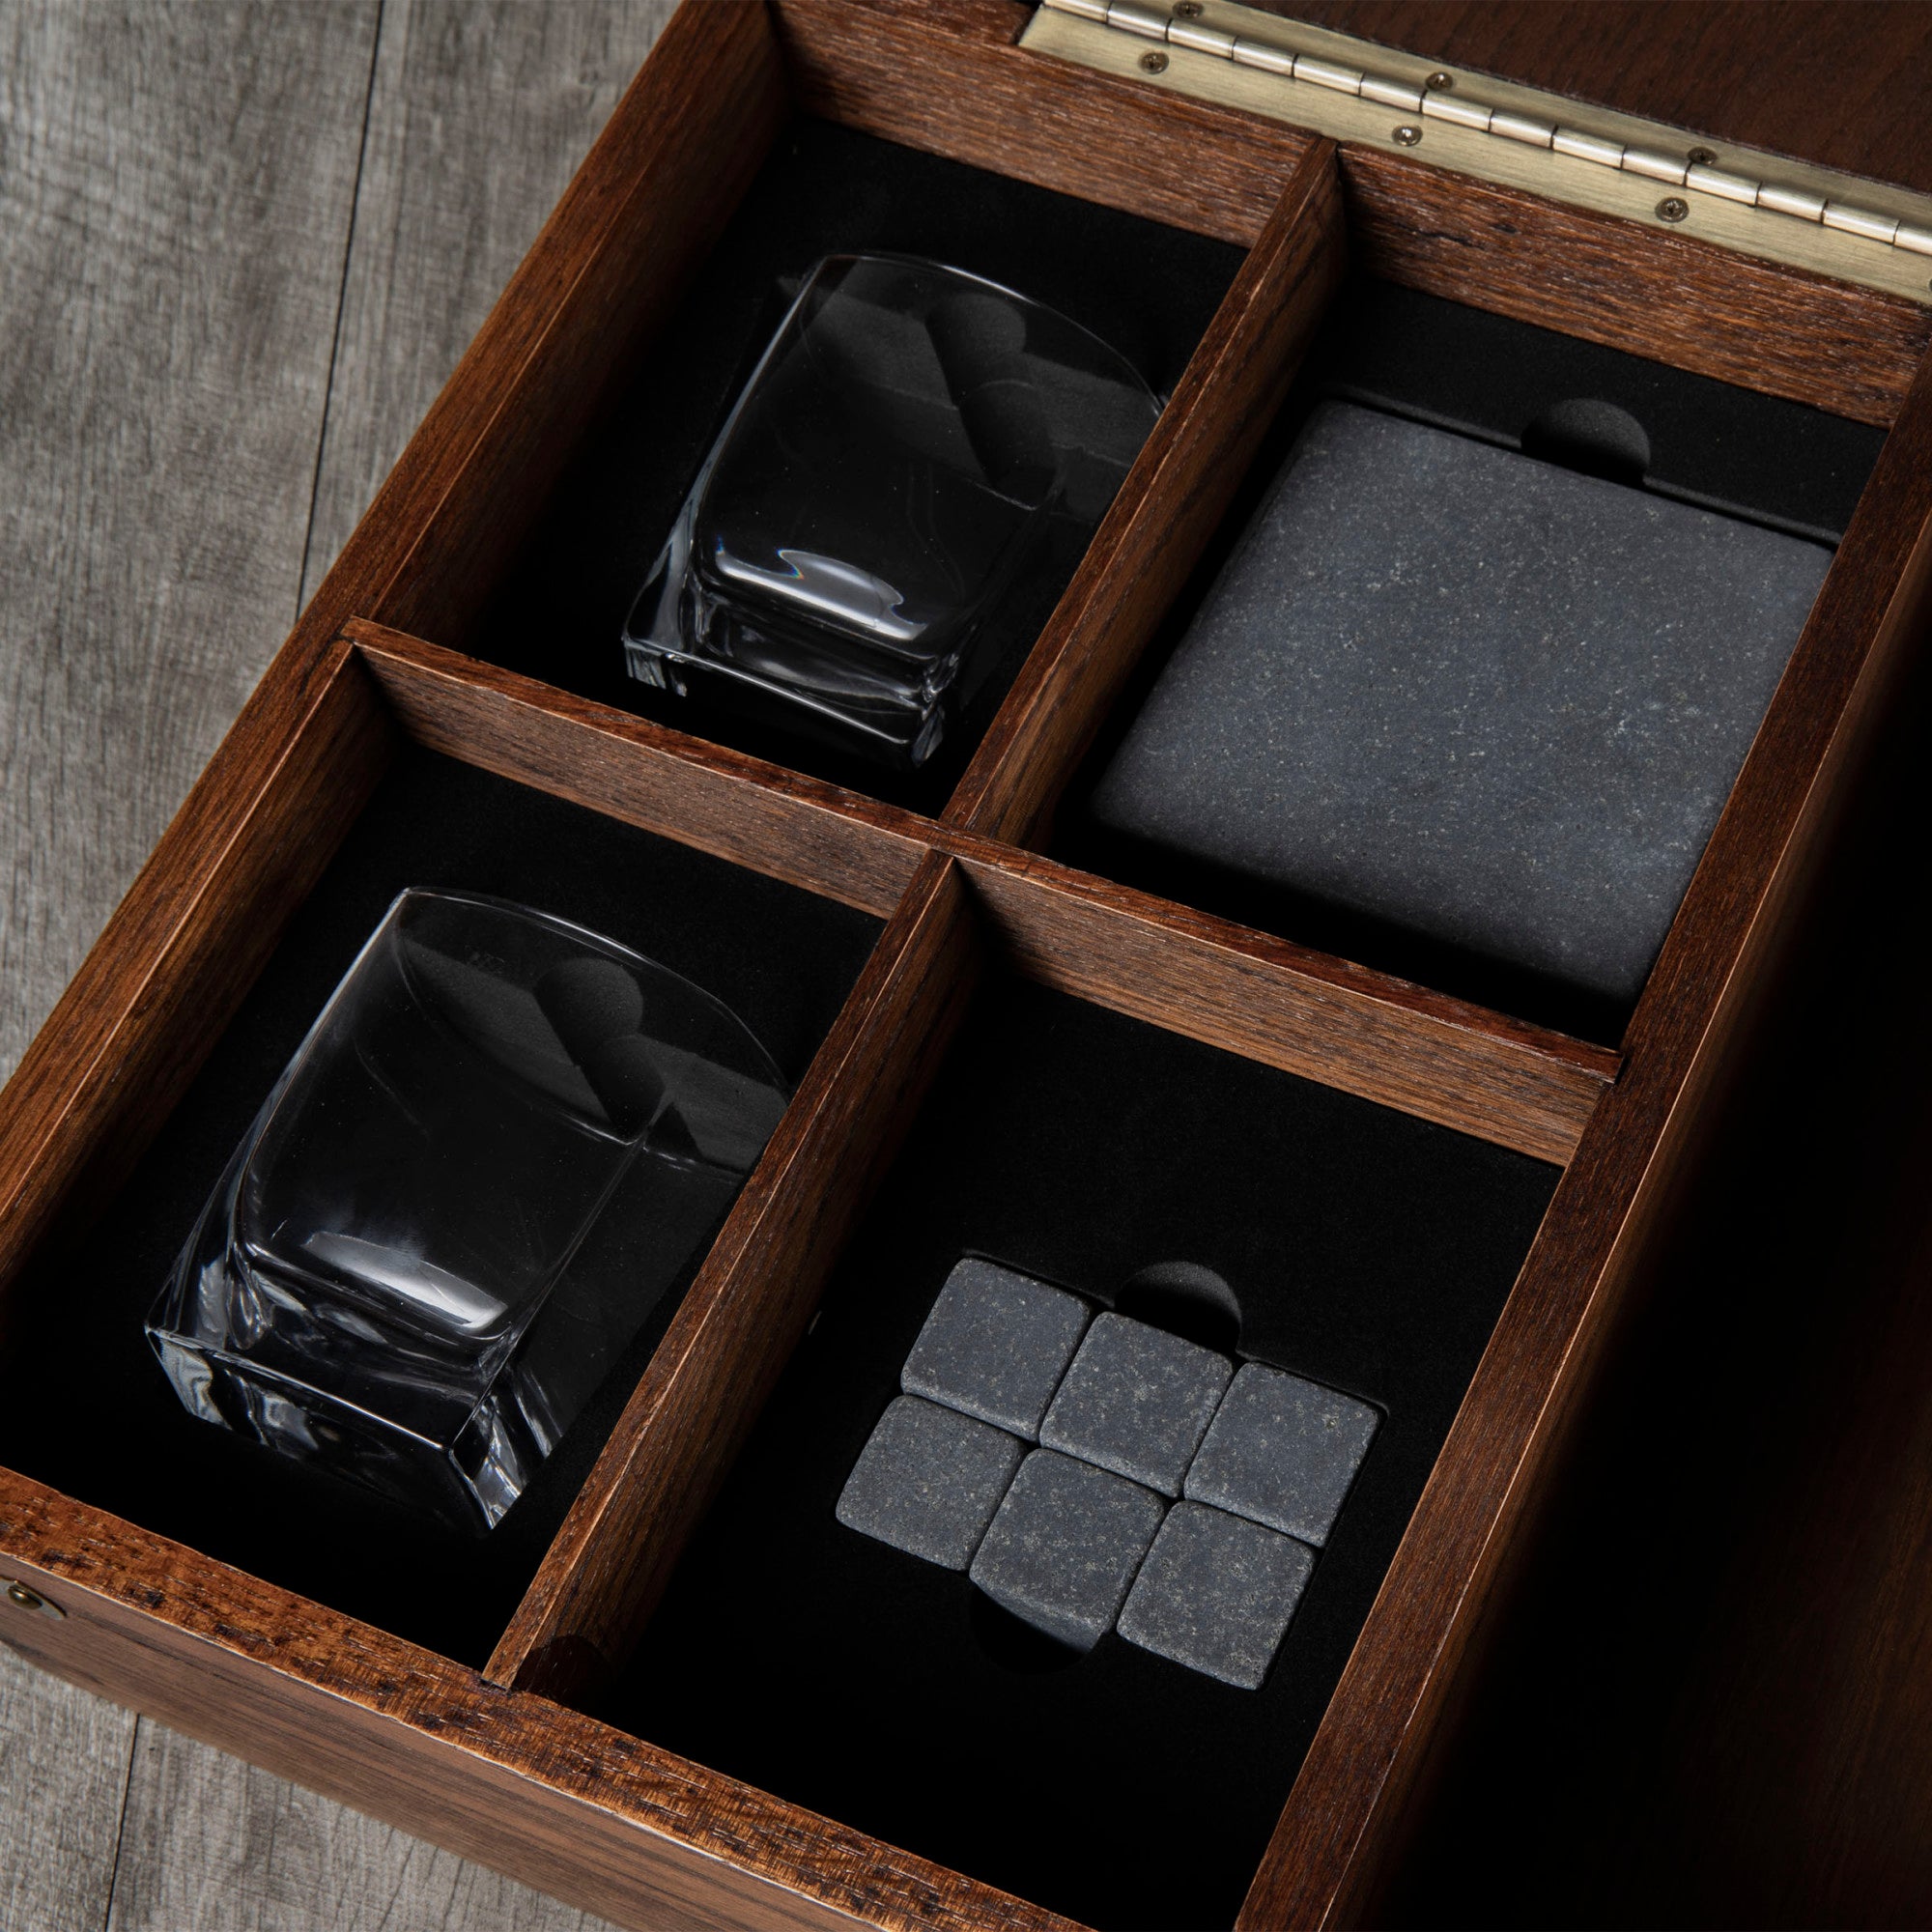 Seattle Mariners - Whiskey Box Gift Set